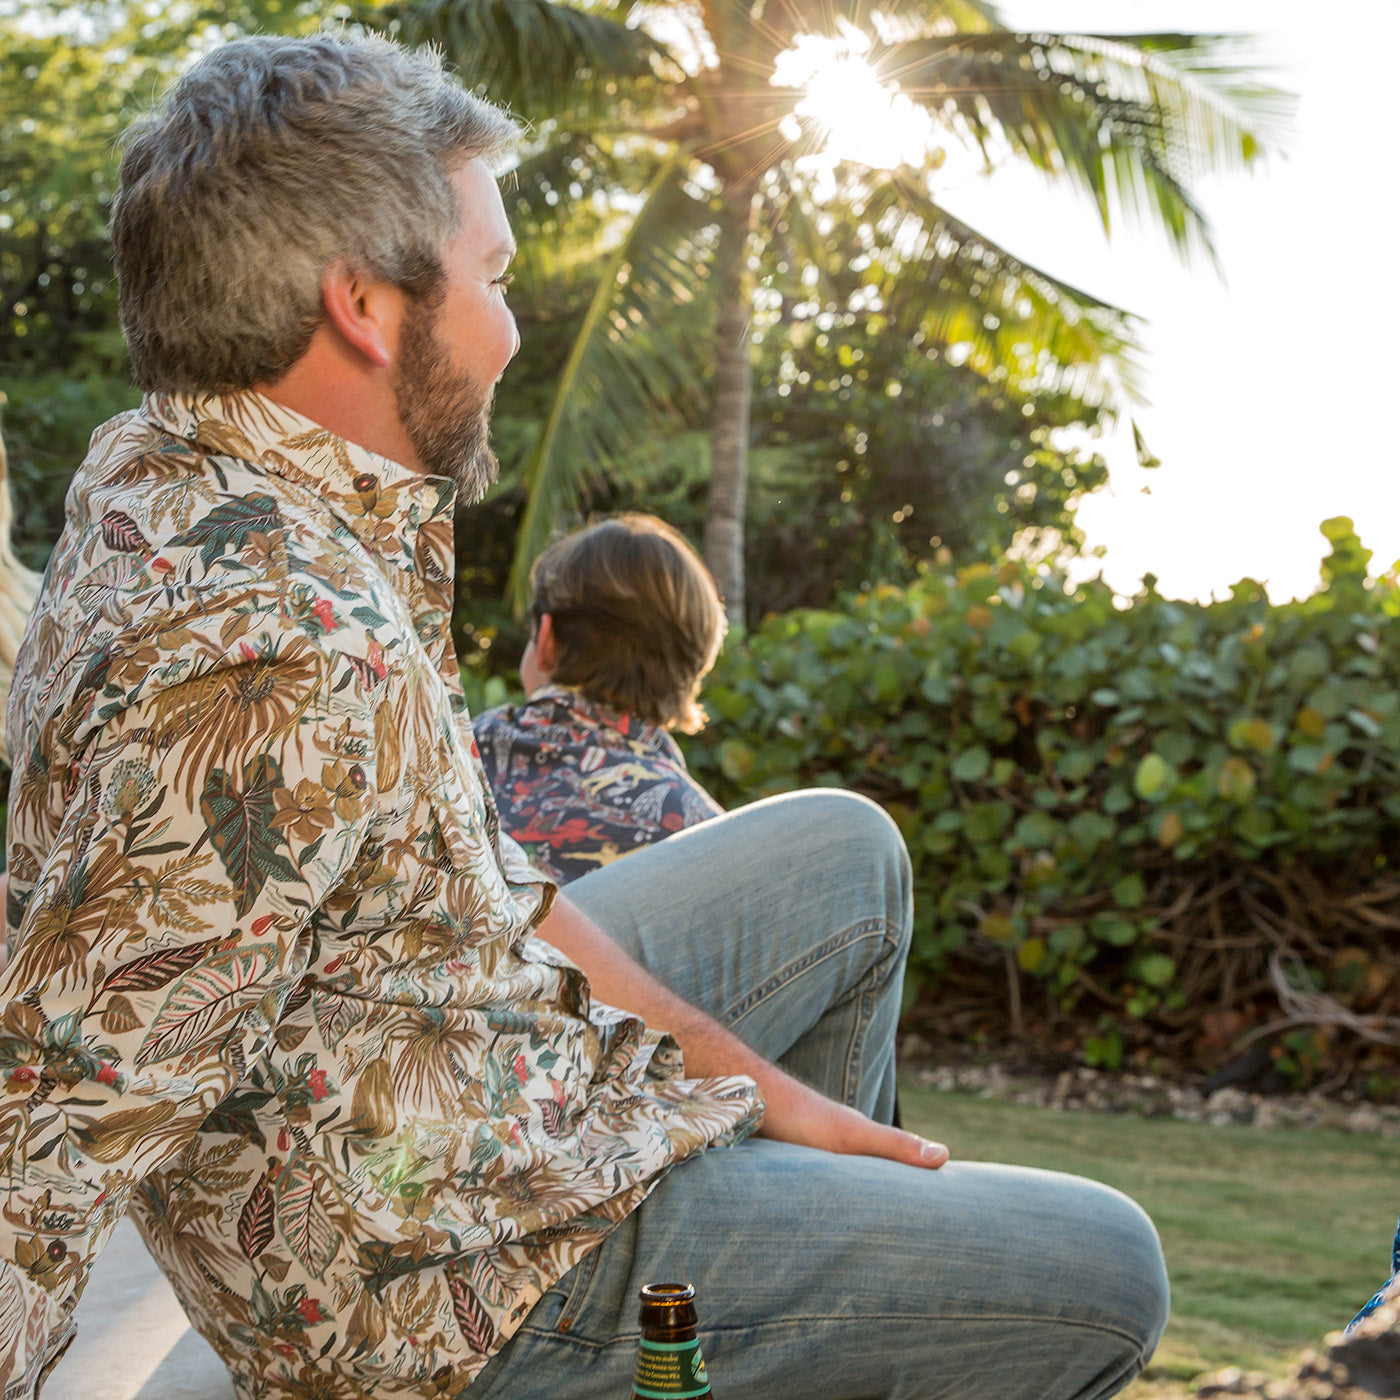 Tin Haul Men's Hawaiian Floral Long Sleeve Western Snap Shirt